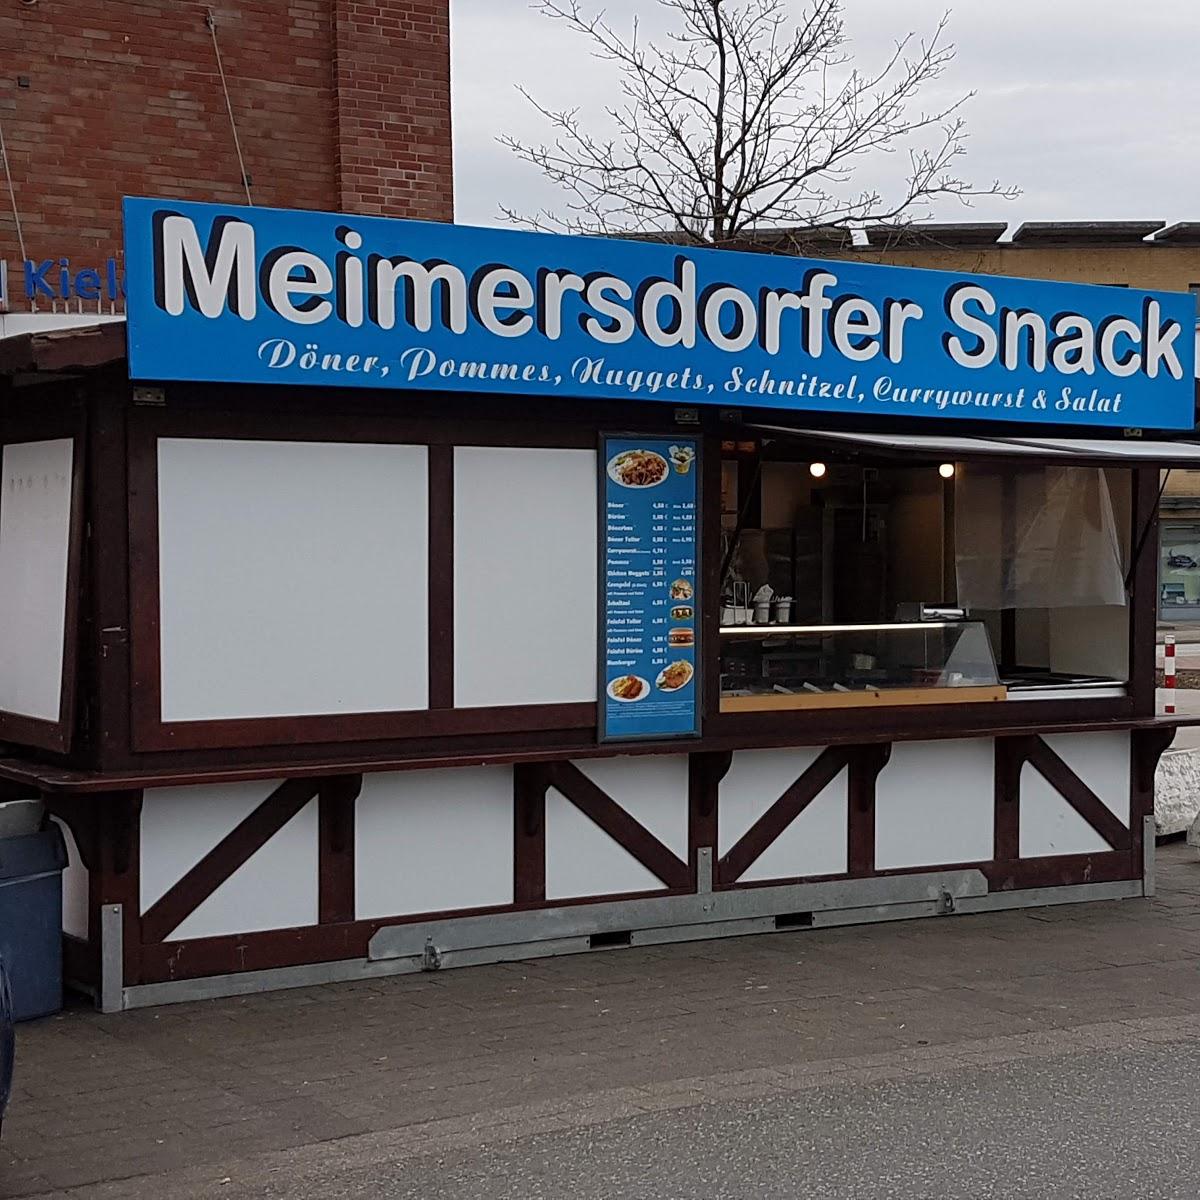 Restaurant "Meimersdorfer Snack" in Kiel